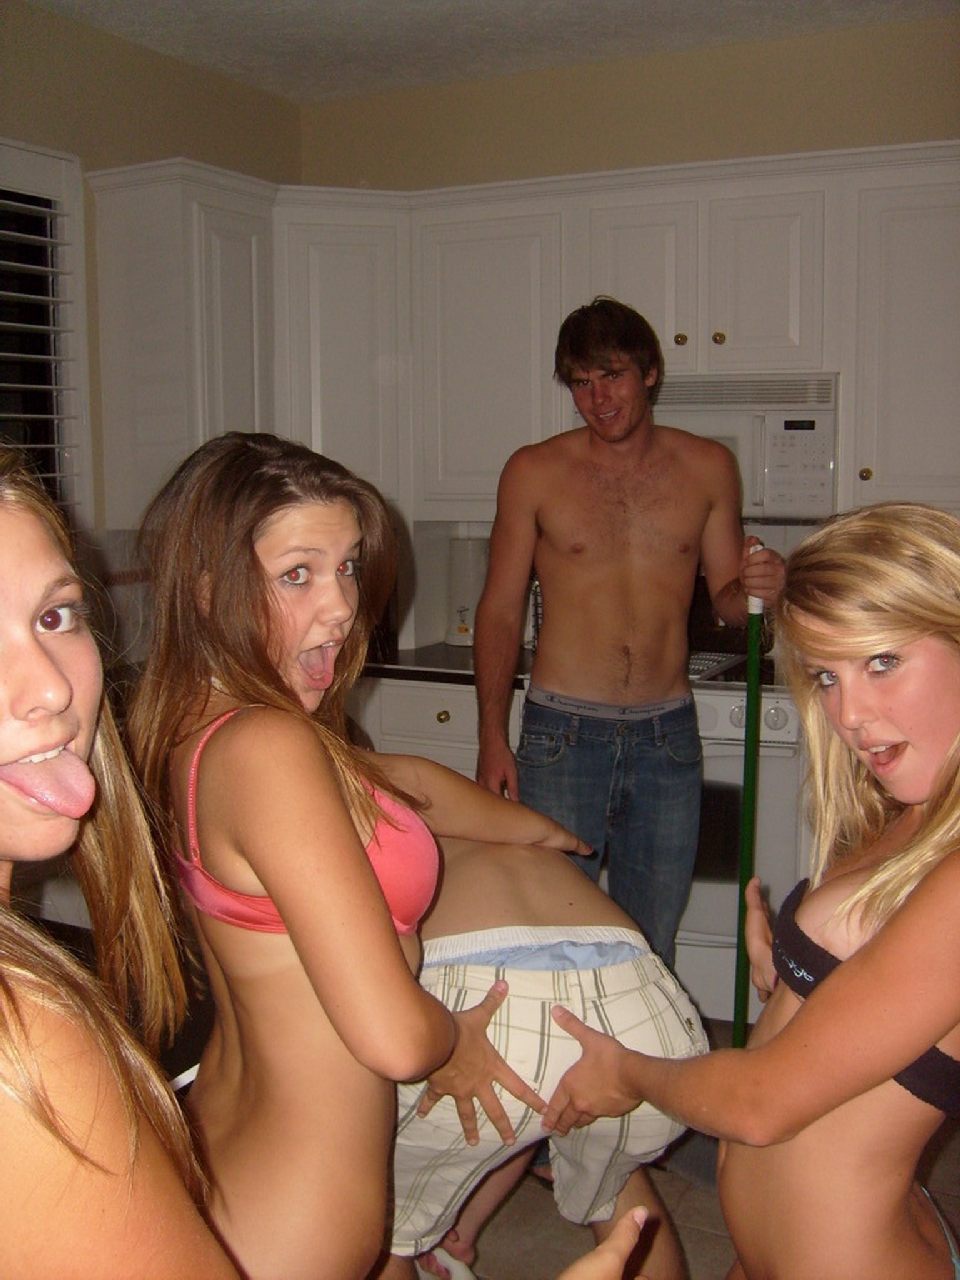 Drunk Amateur Babes Hot Party Time - picture 14